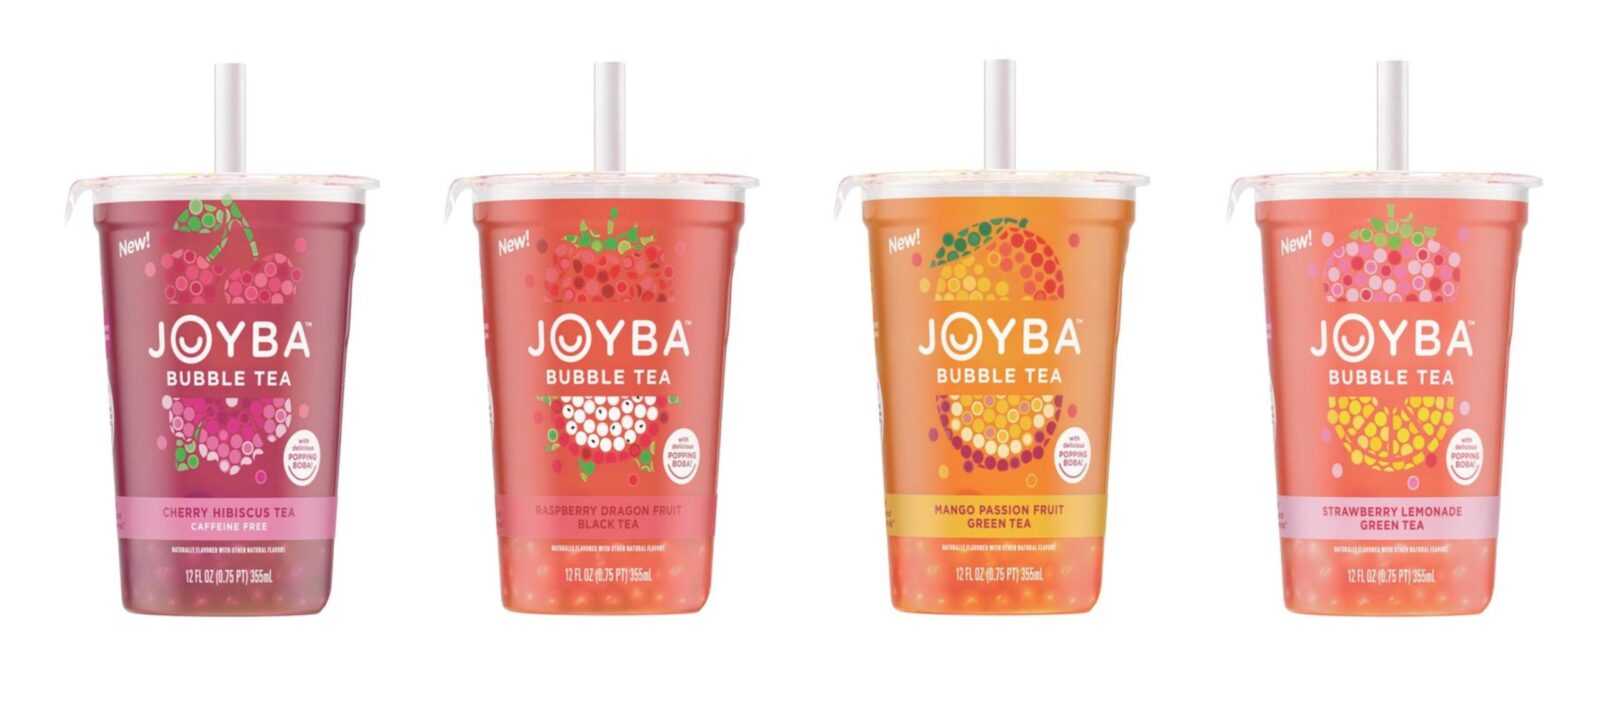 Does Joyba Bubble Tea Have Caffeine? 